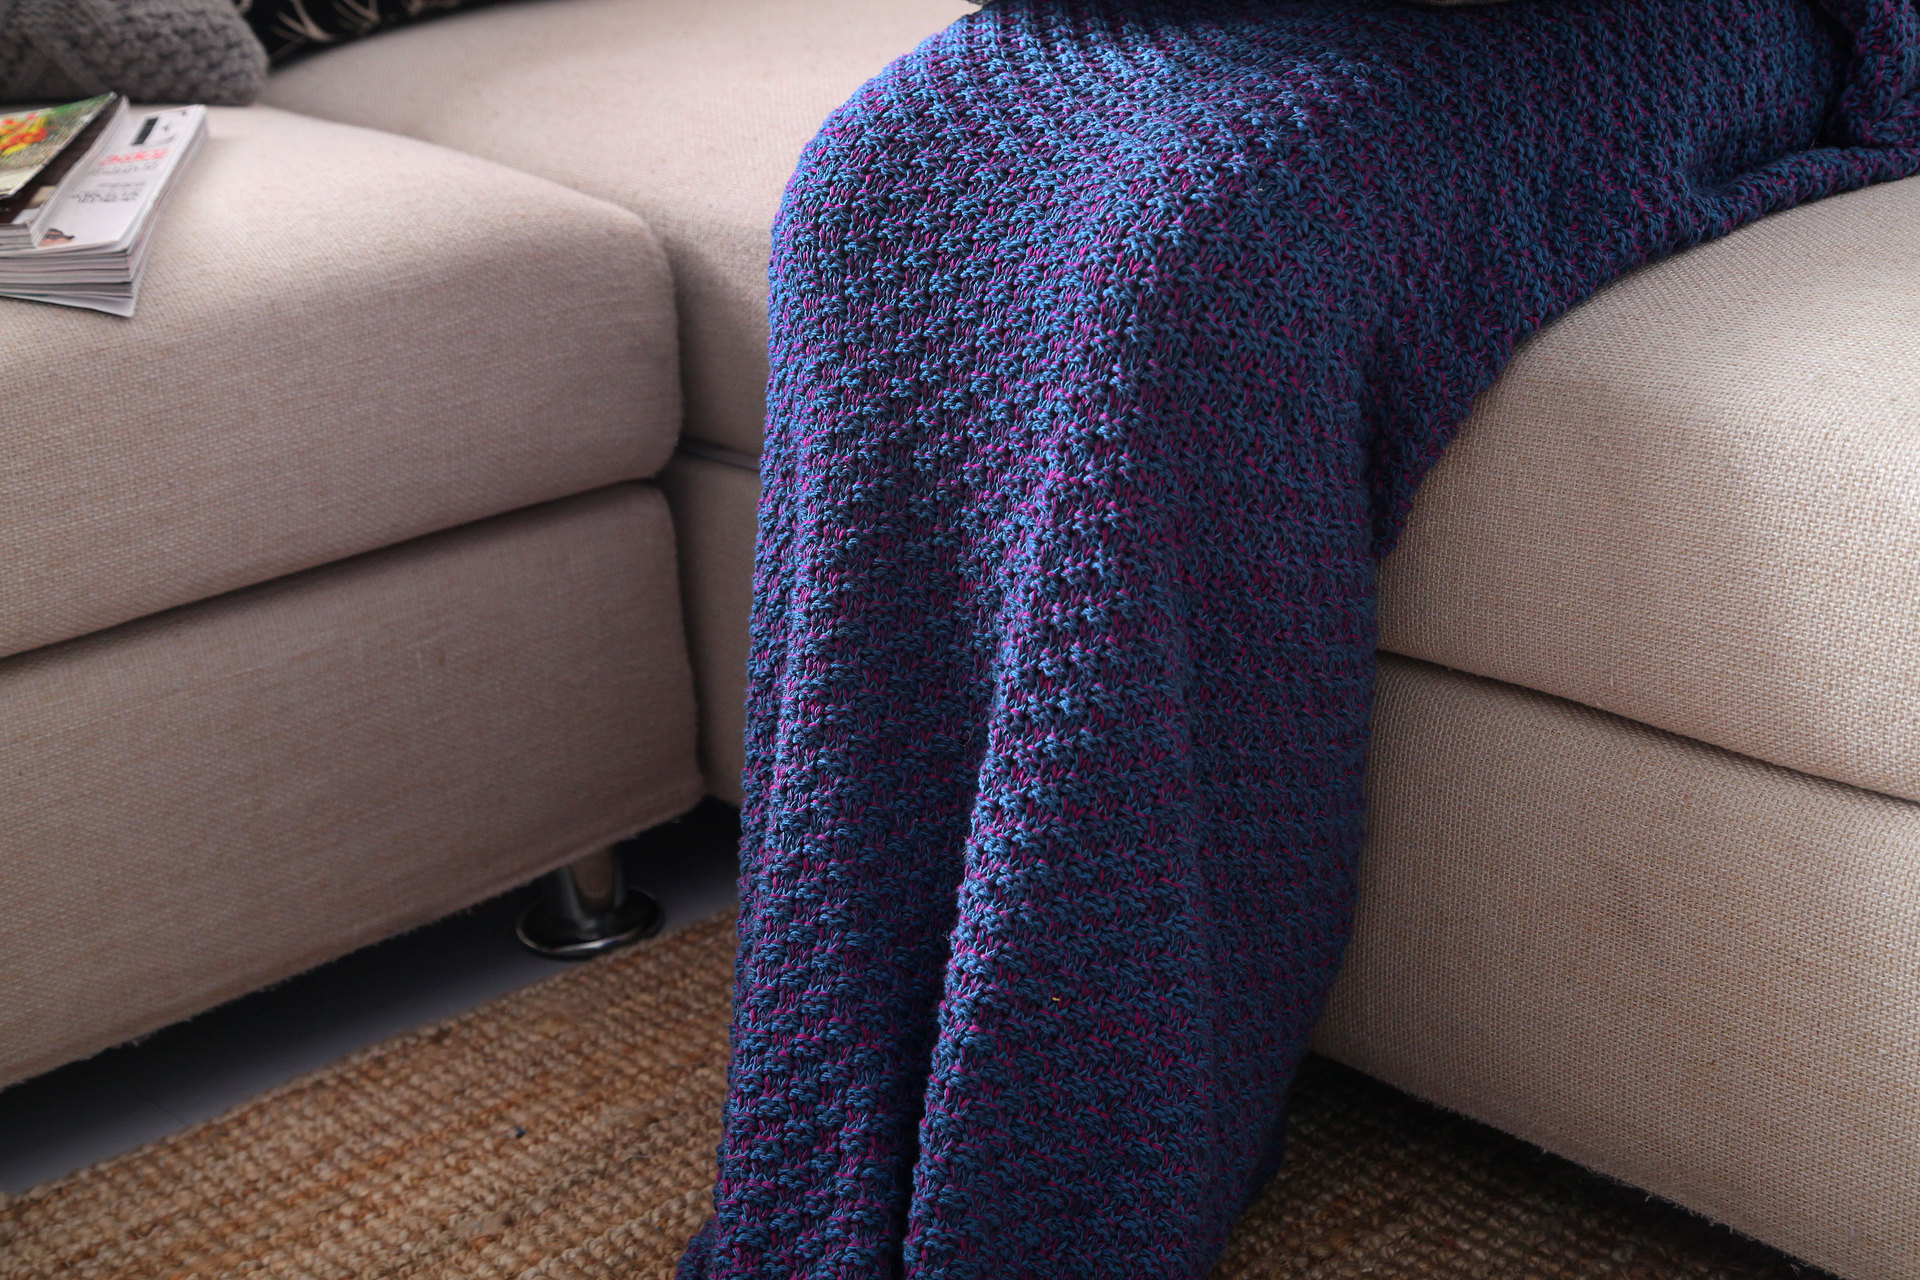 Yarn-Knitted-Mermaid-Tail-Blanket-Handmade-Crochet-Throw-Super-Soft-Sofa-Bed-Mat-Sleeping-Bag-1083119-9